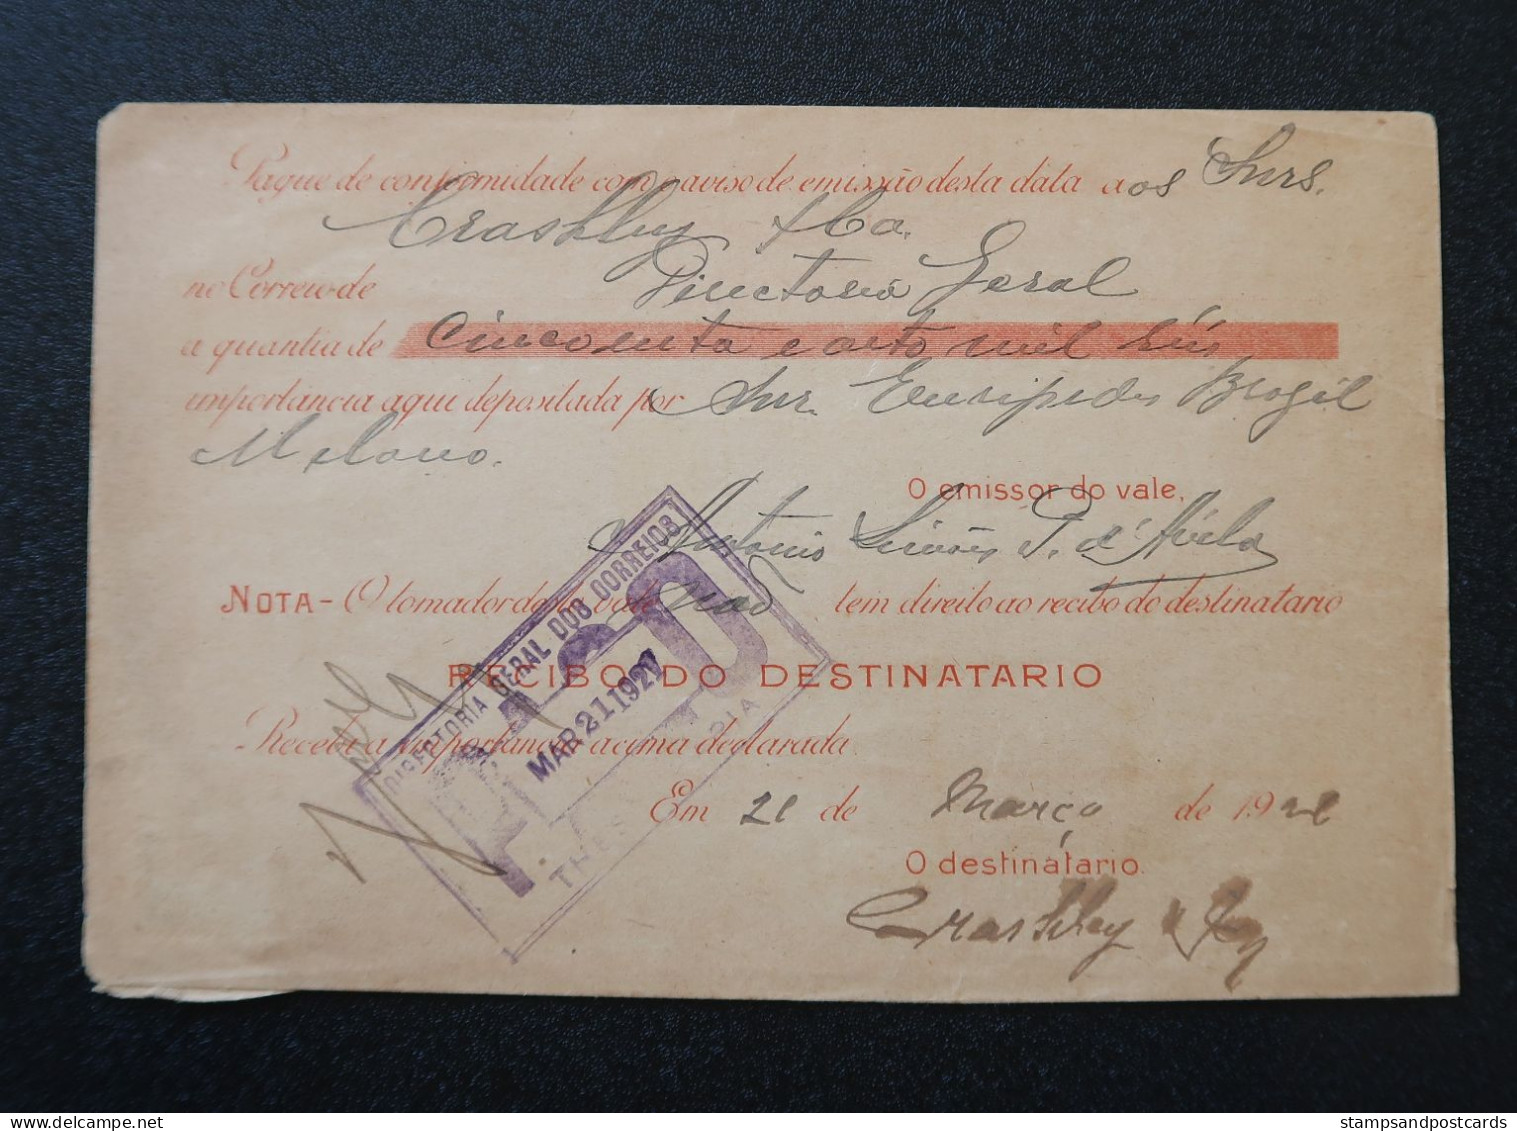 Brèsil Brasil Mandat Vale Postal 1921 Alegrete Rio Grande Do Sul Timbre Fiscal Deposito Brazil Money Order Revenue Stamp - Lettres & Documents